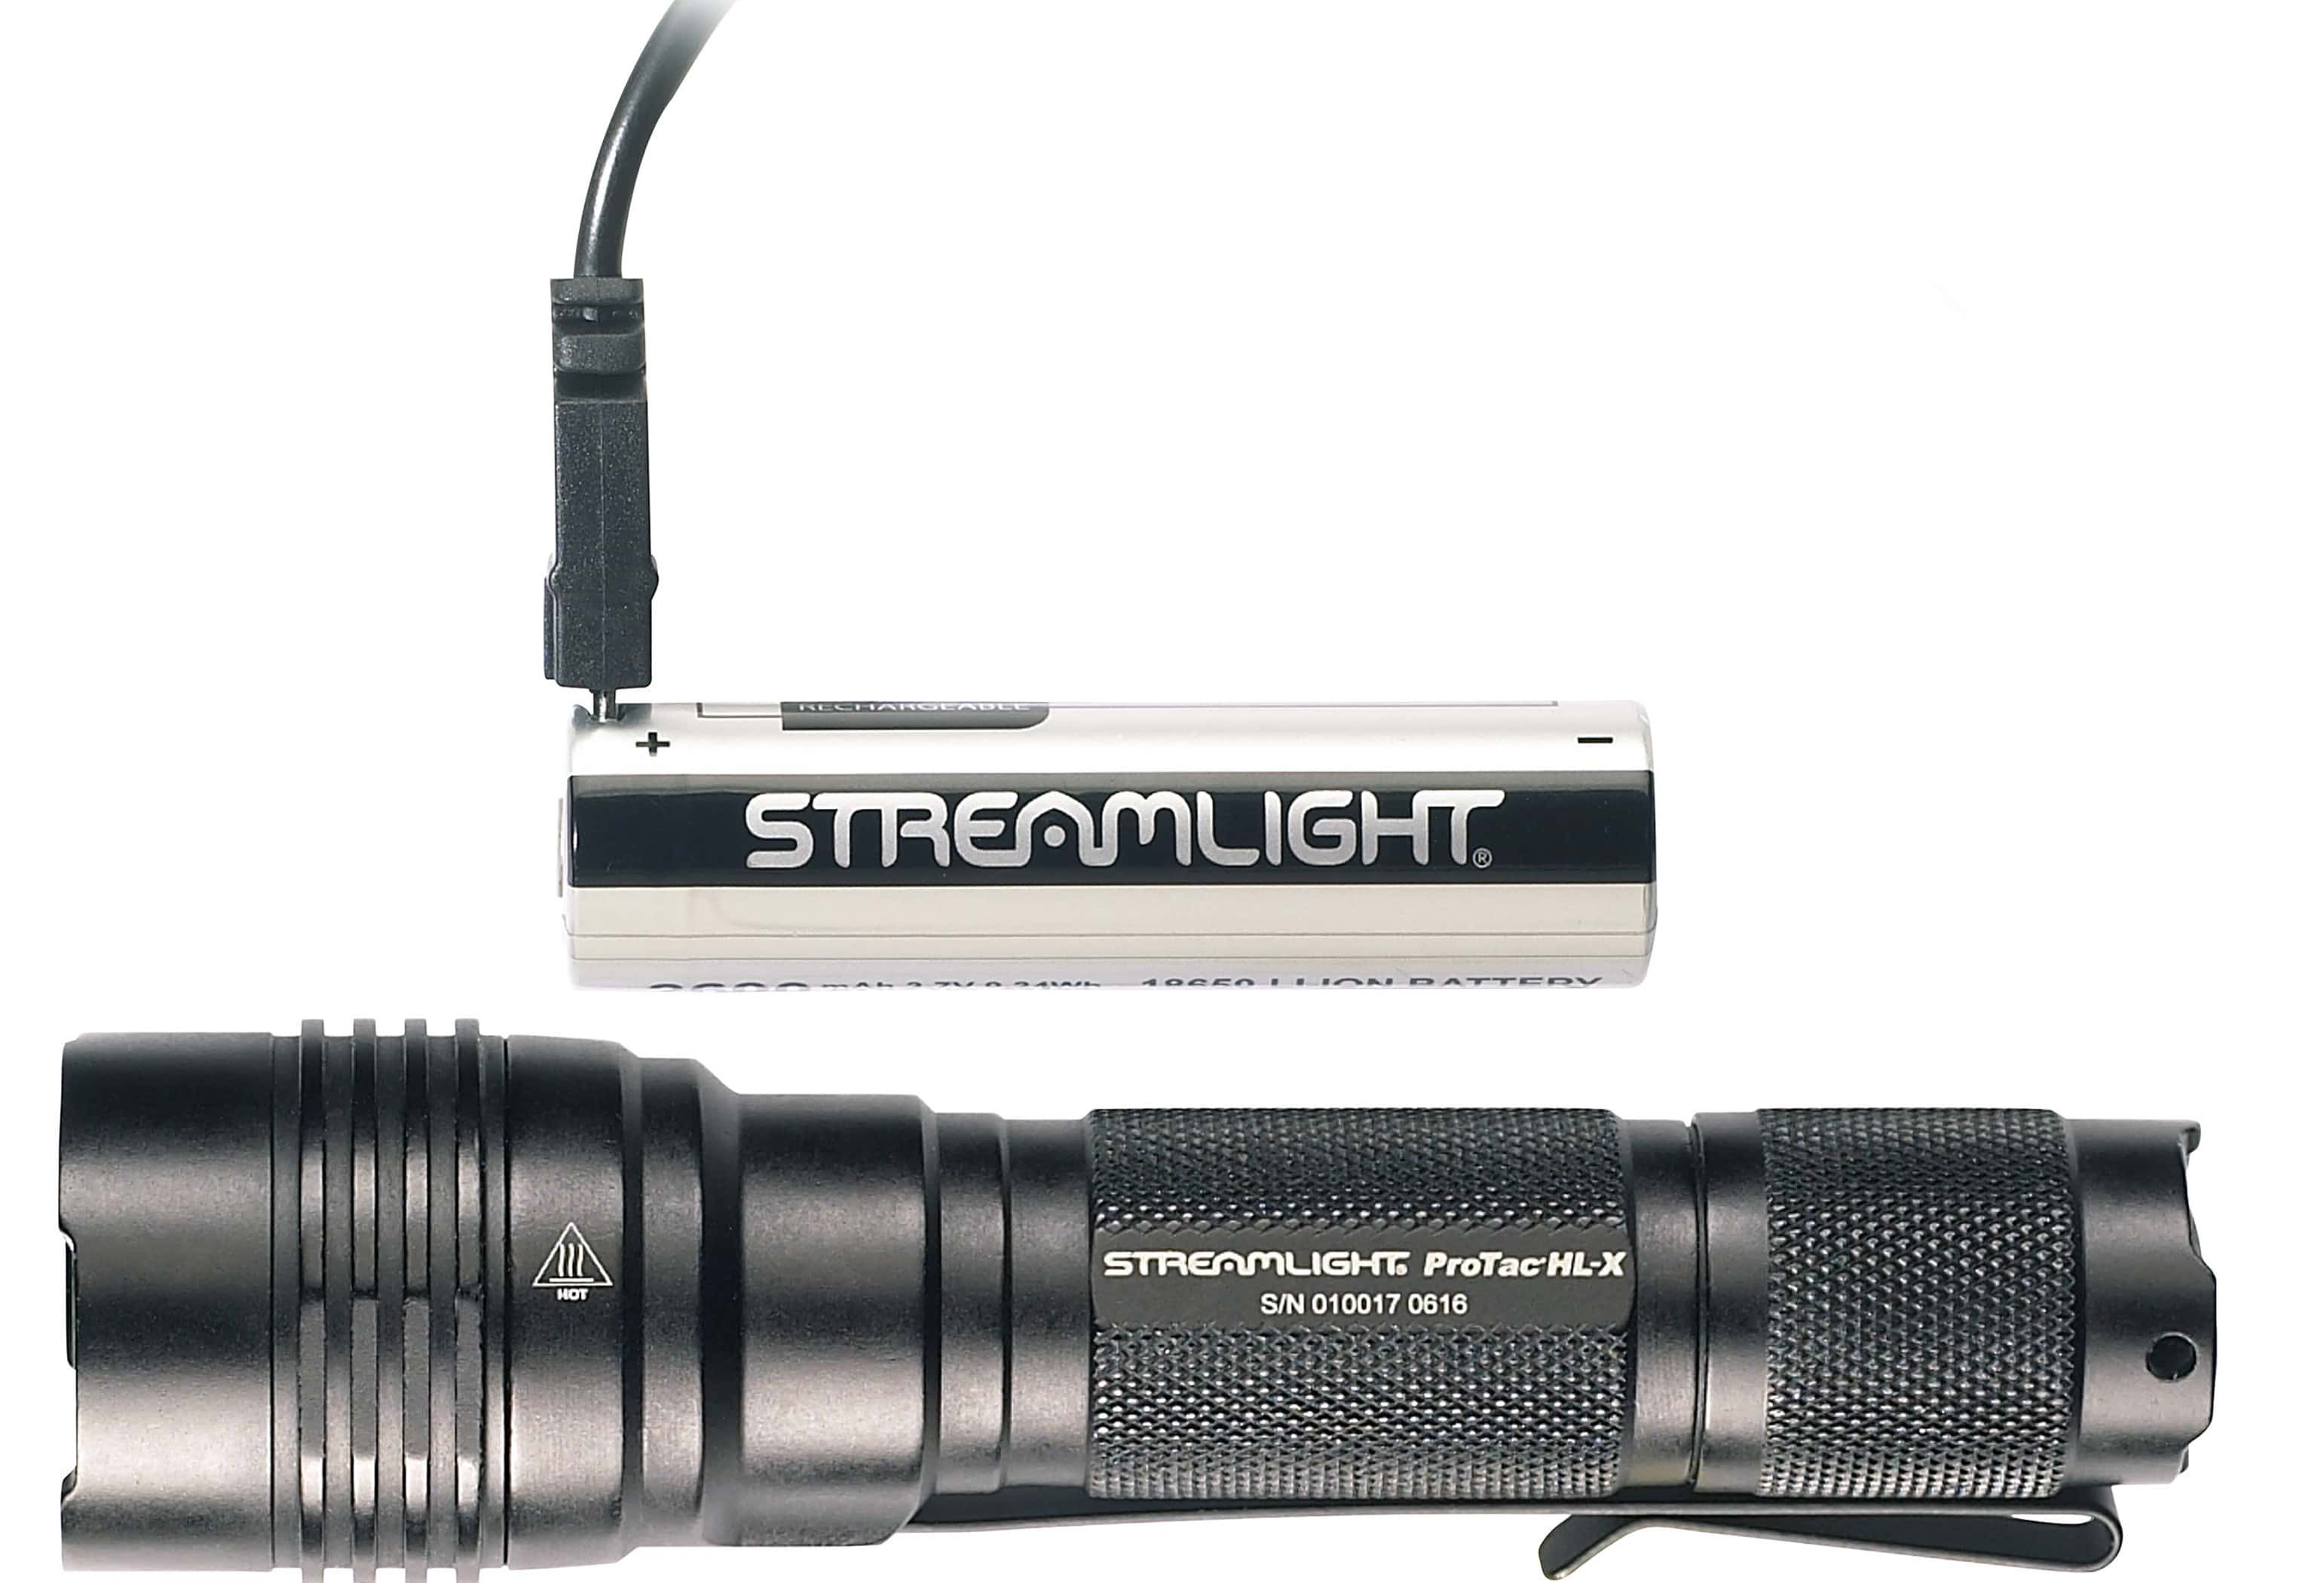 Streamlight Protac HL-X